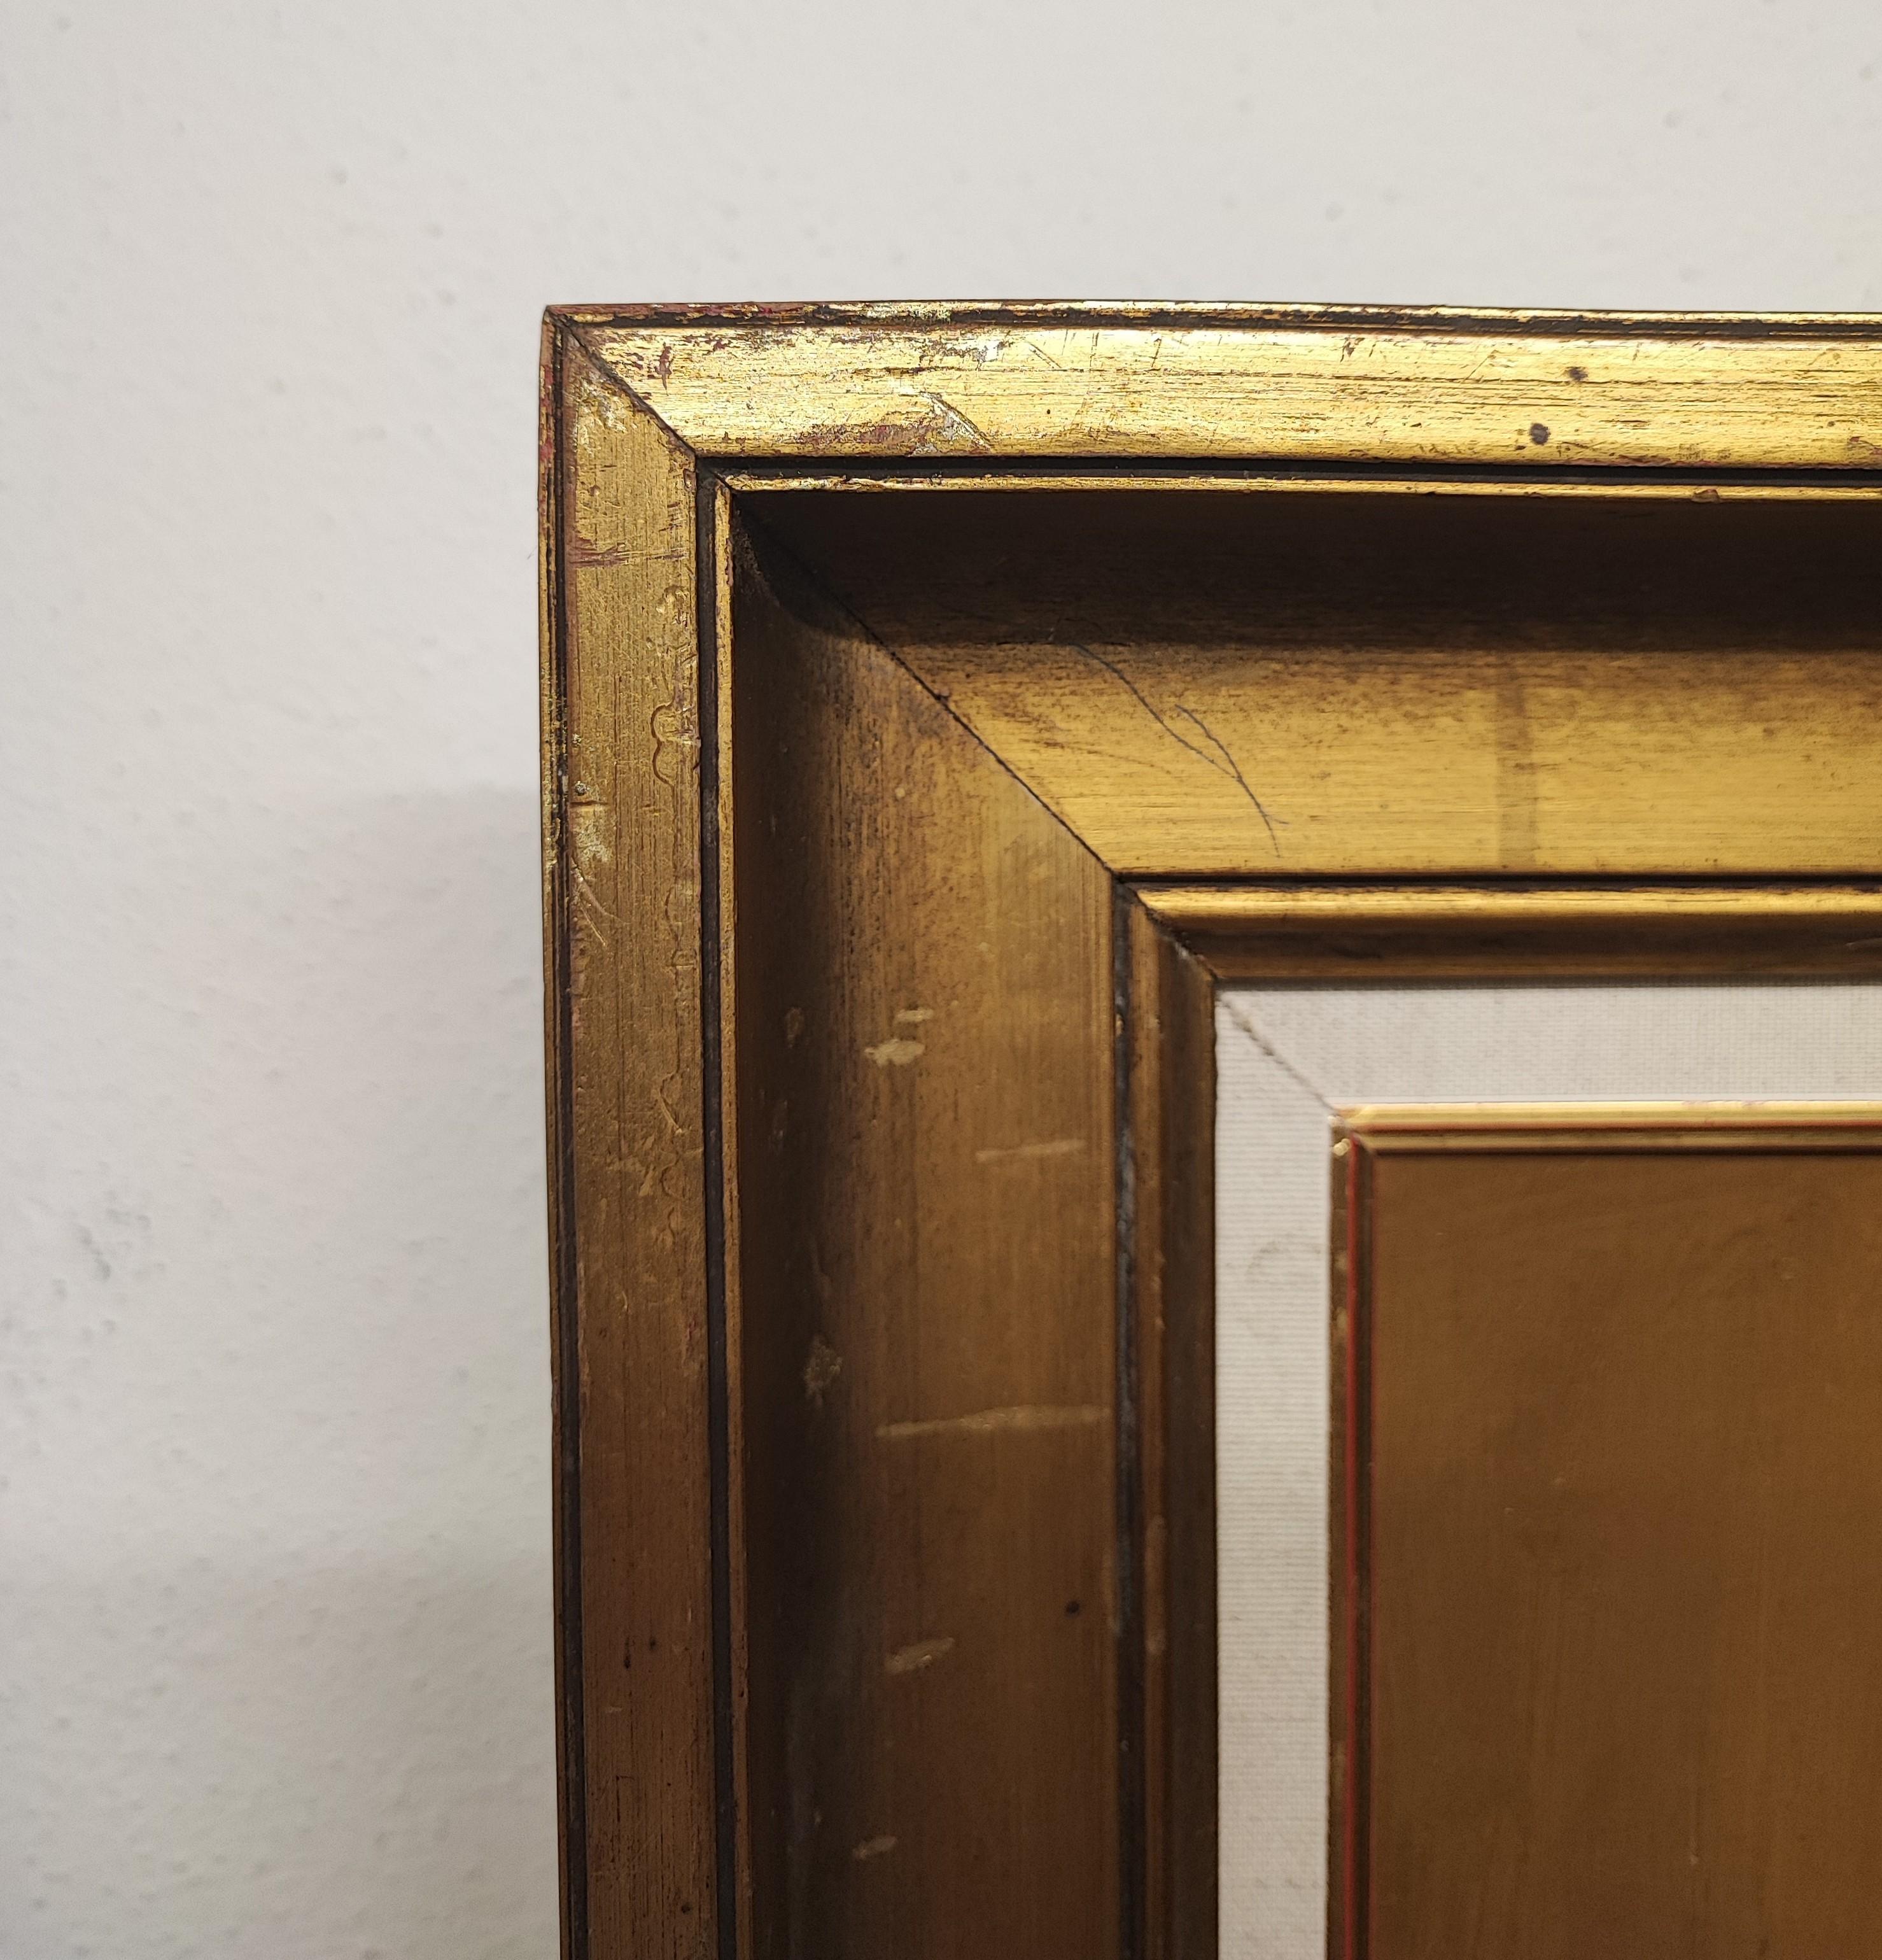 Work on wood
Golden wooden frame
76 x 79 x 6 cm